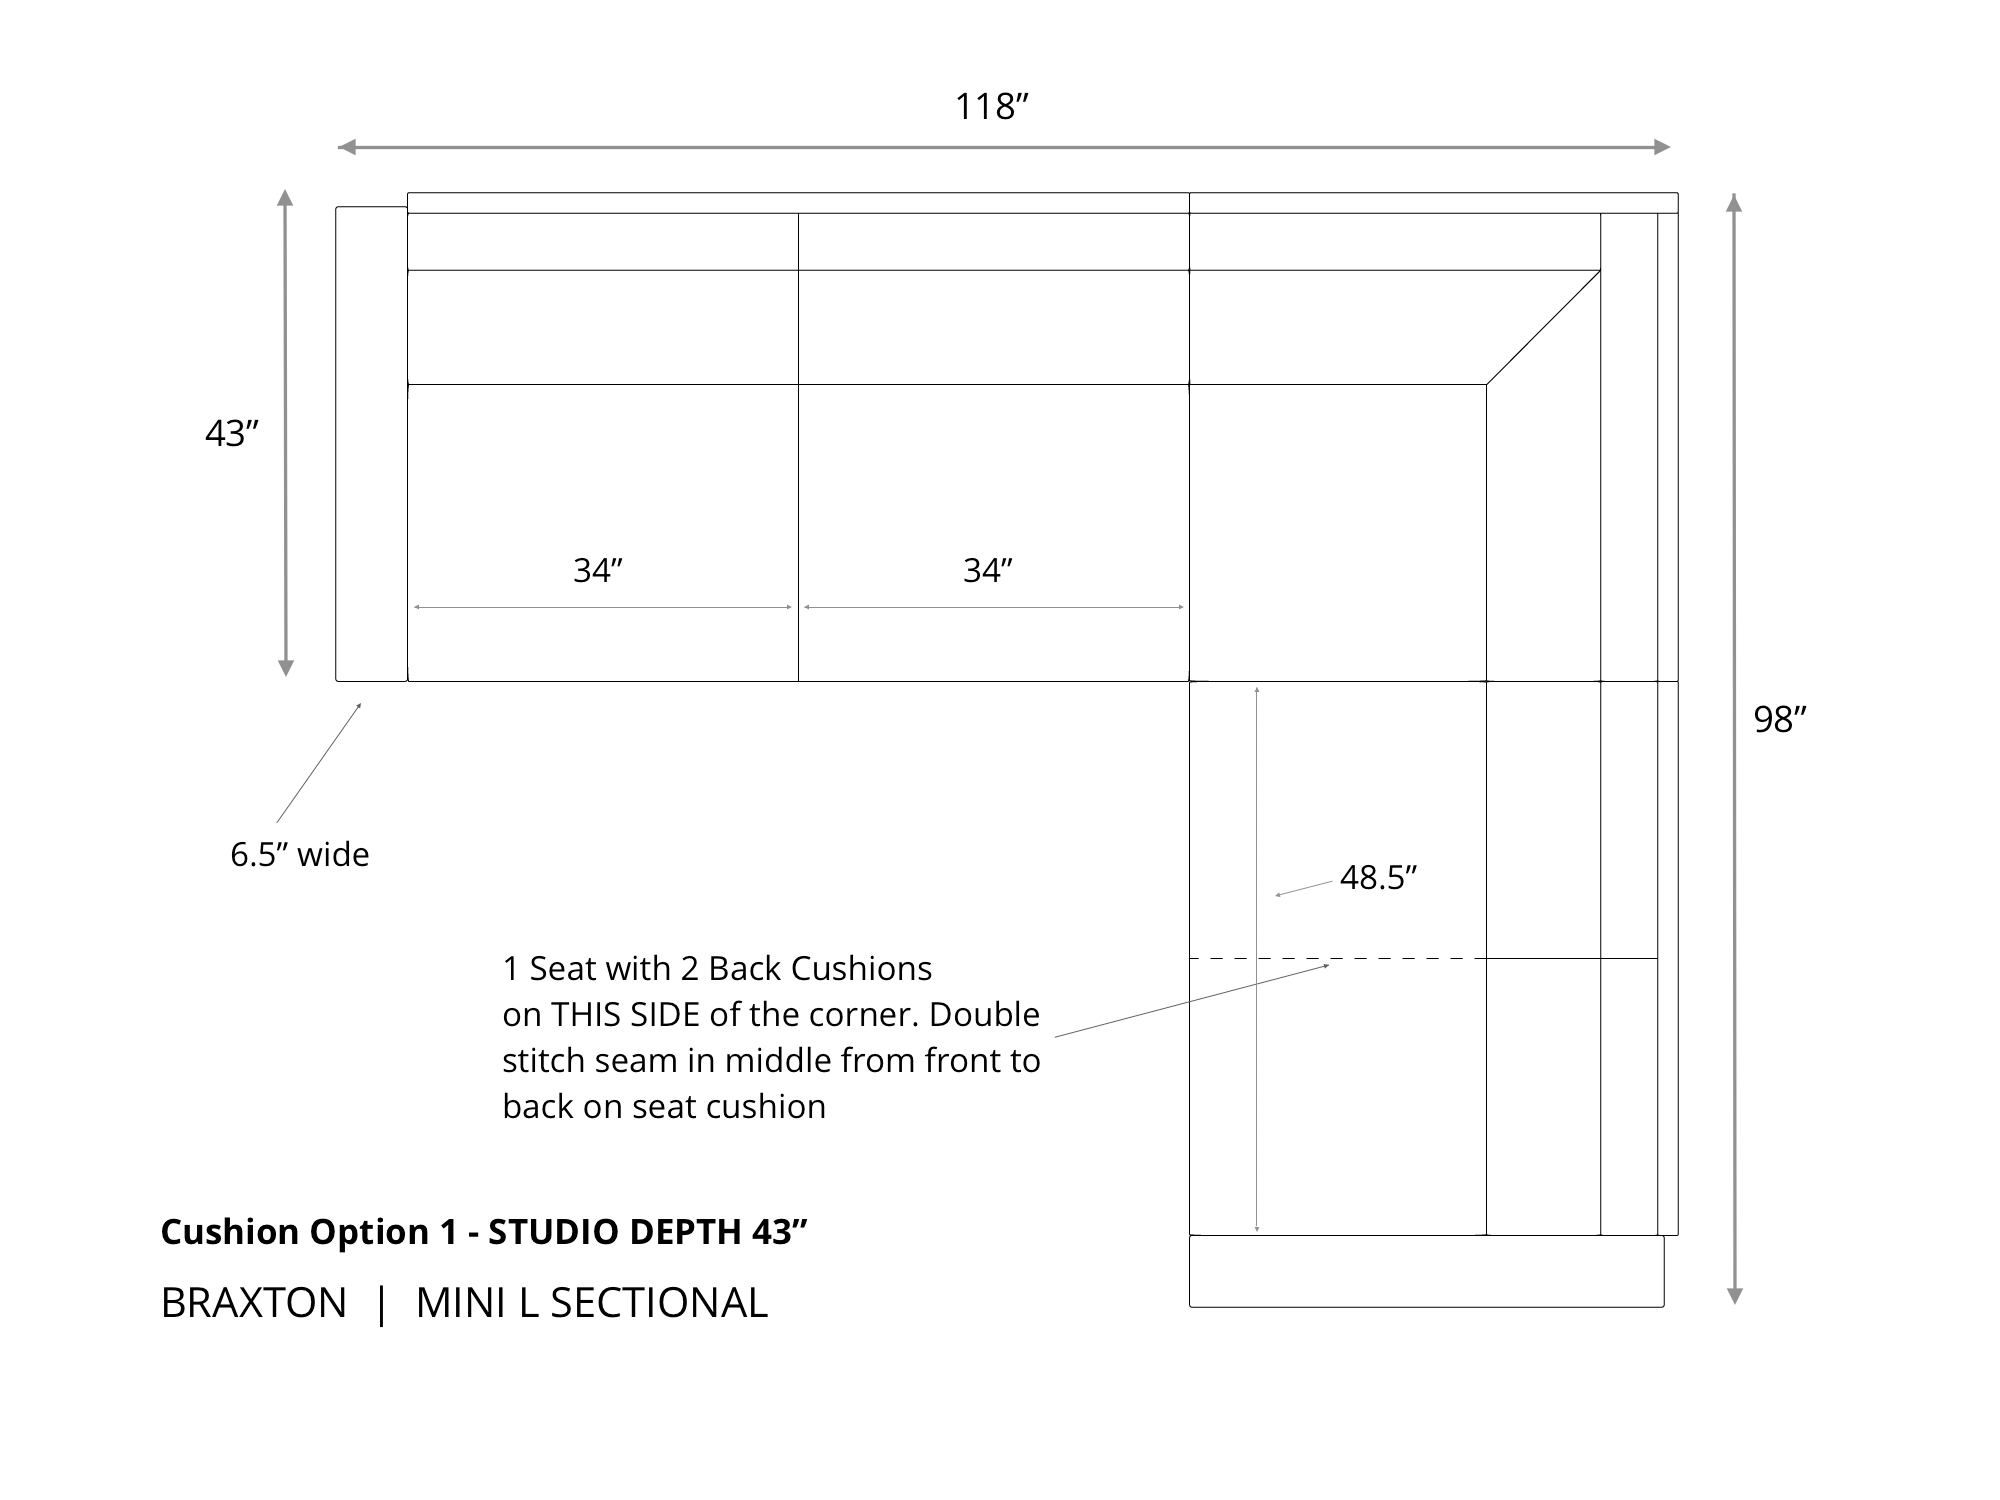 Braxton Mini L Sectional Dimensions - Cushion Option 1 - 43 inch depth